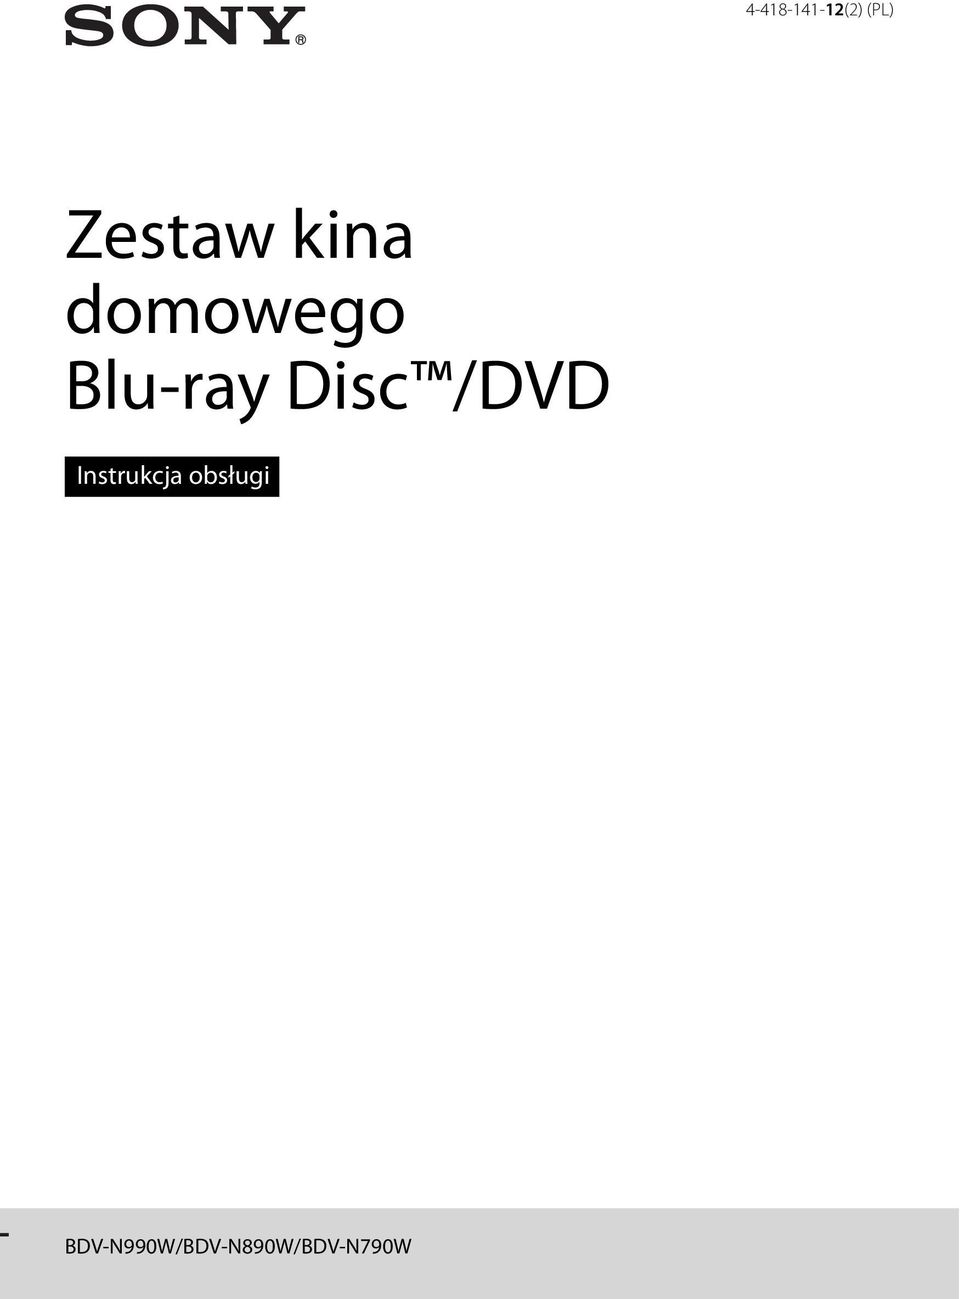 Blu-ray Disc /DVD